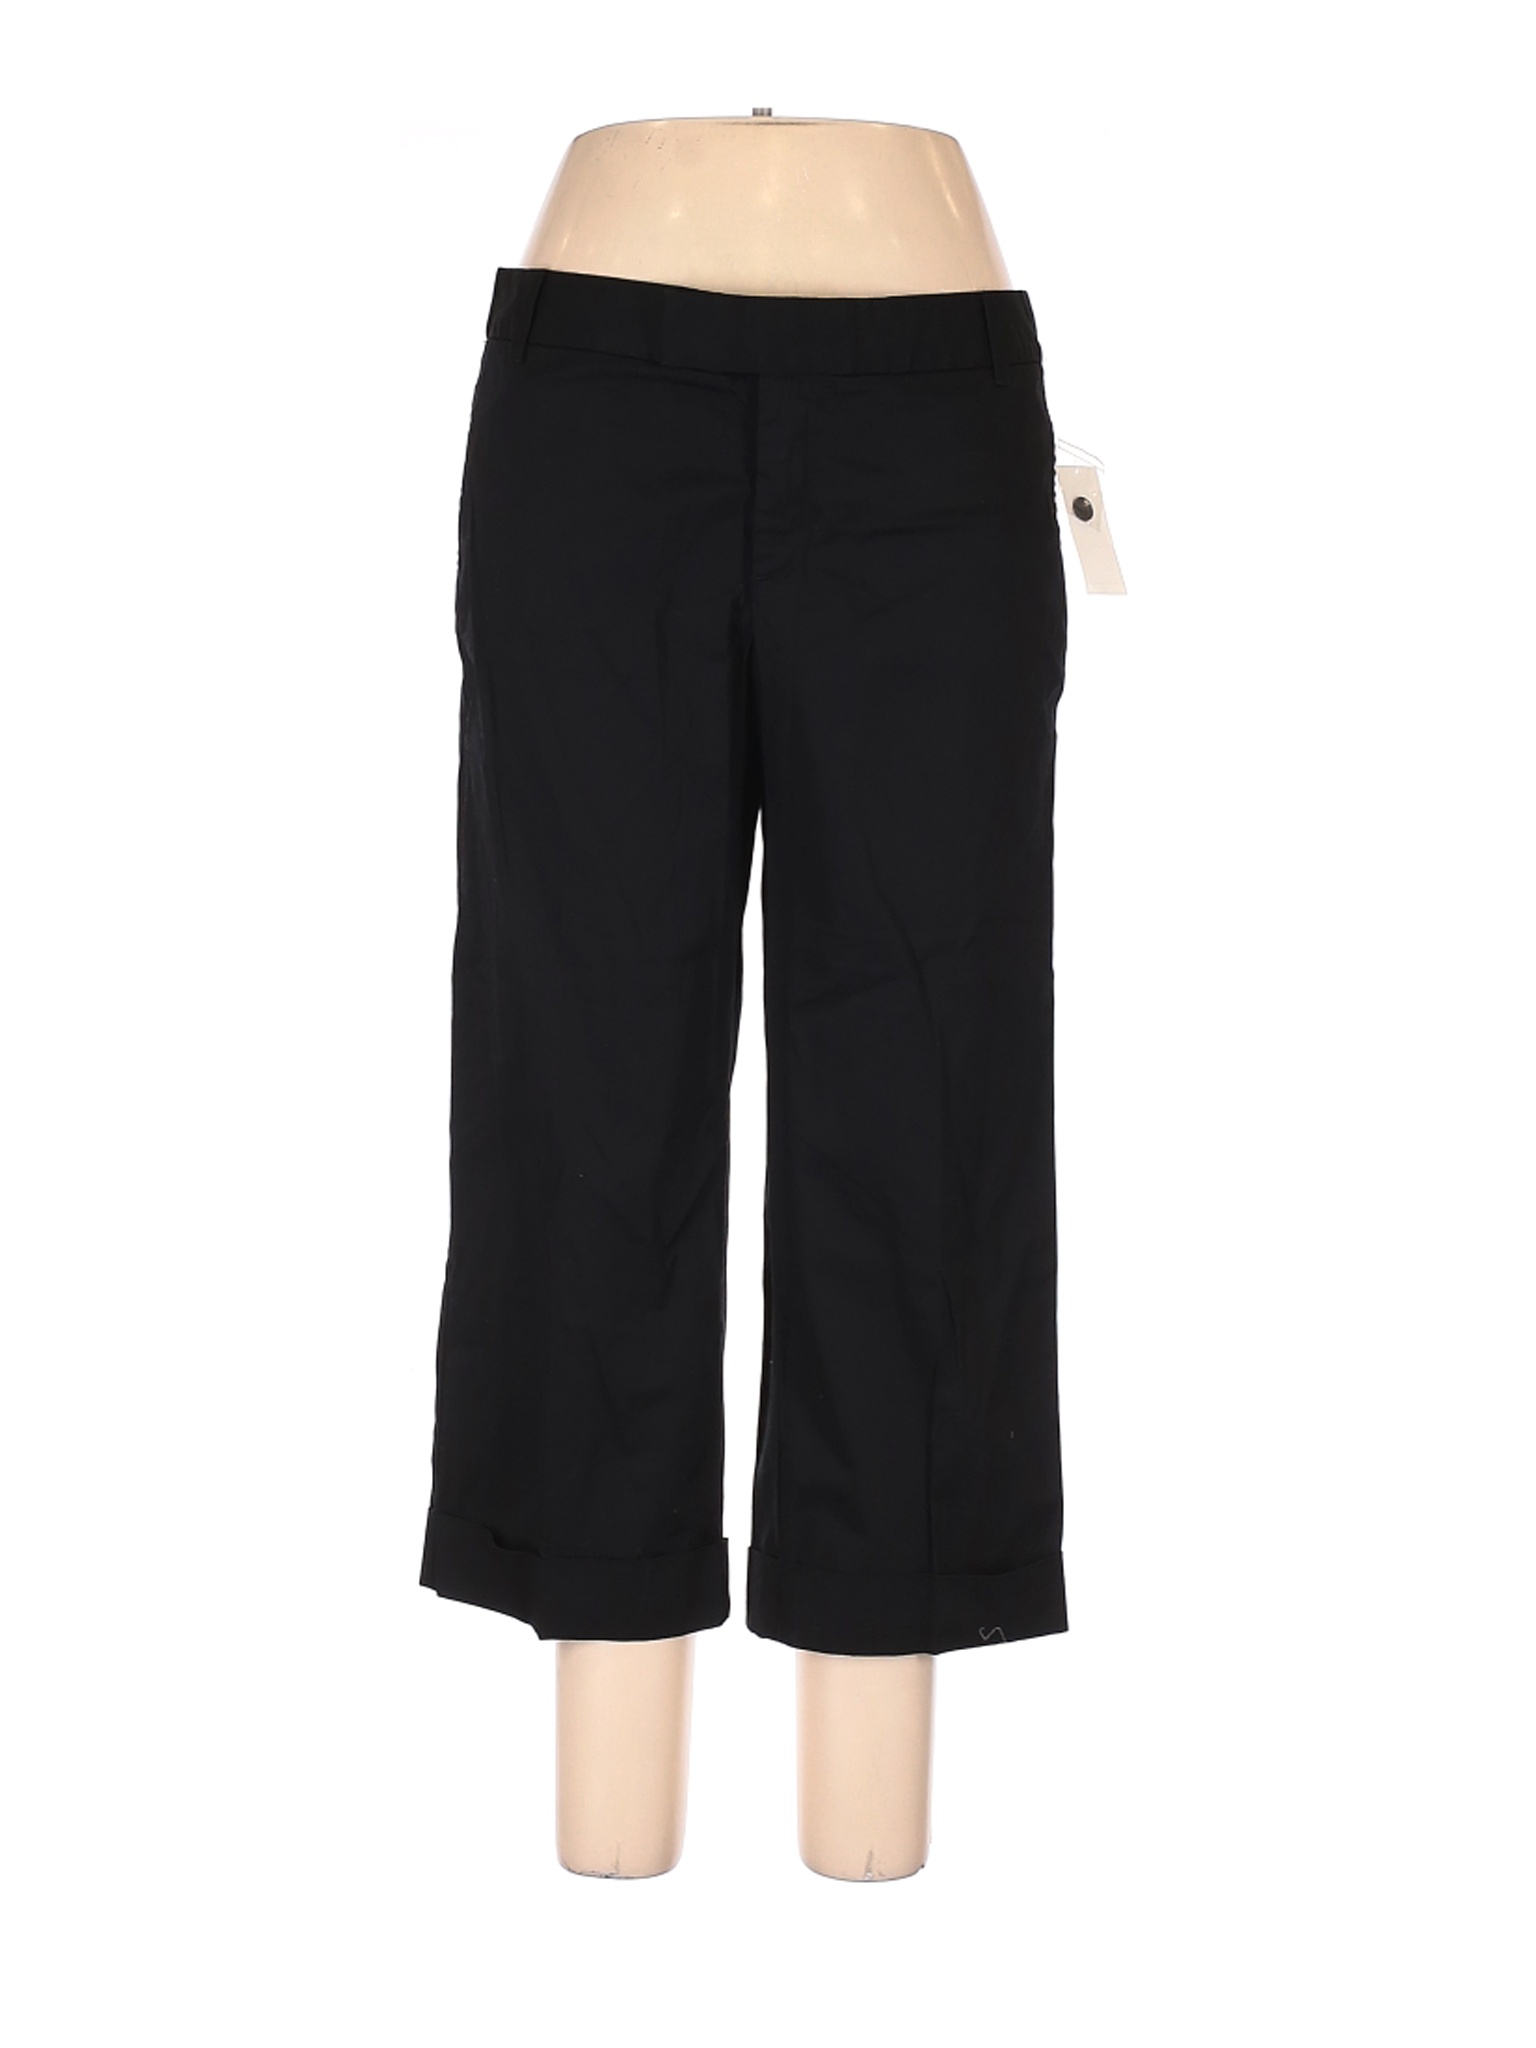 NWT Gap Women Black Casual Pants 12 | eBay